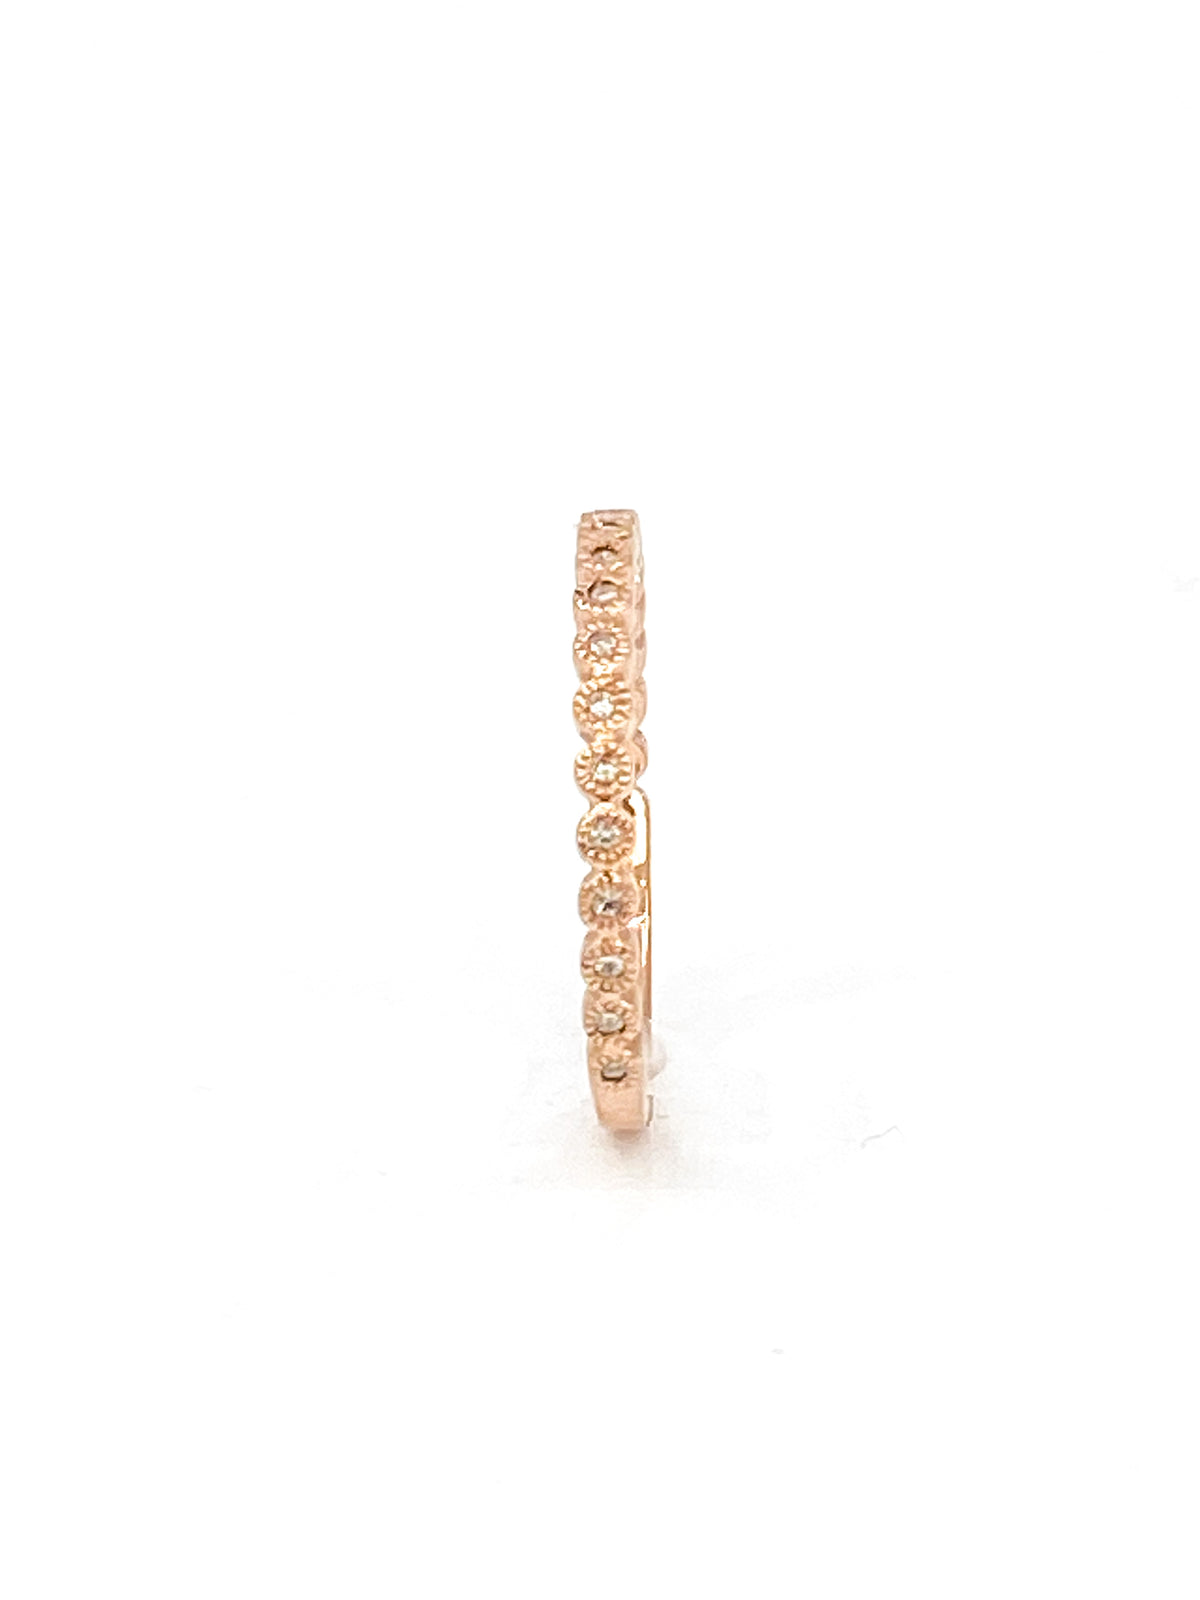 10K Rose Gold 0.10cttw Diamond Ring, size 6.5